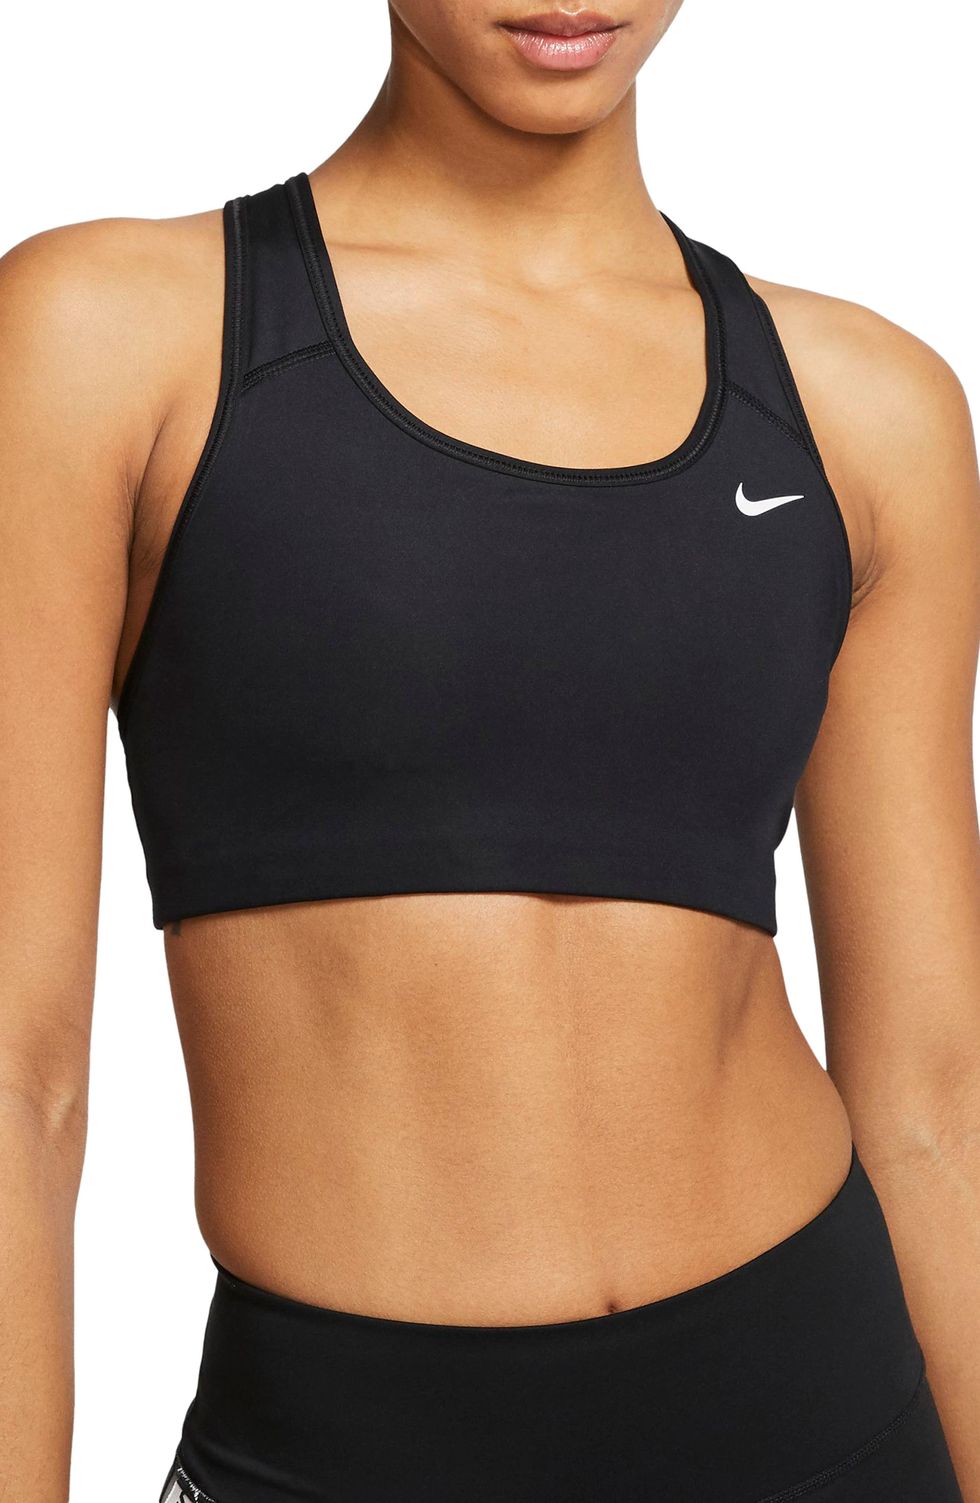 Nike sports bra for women’s